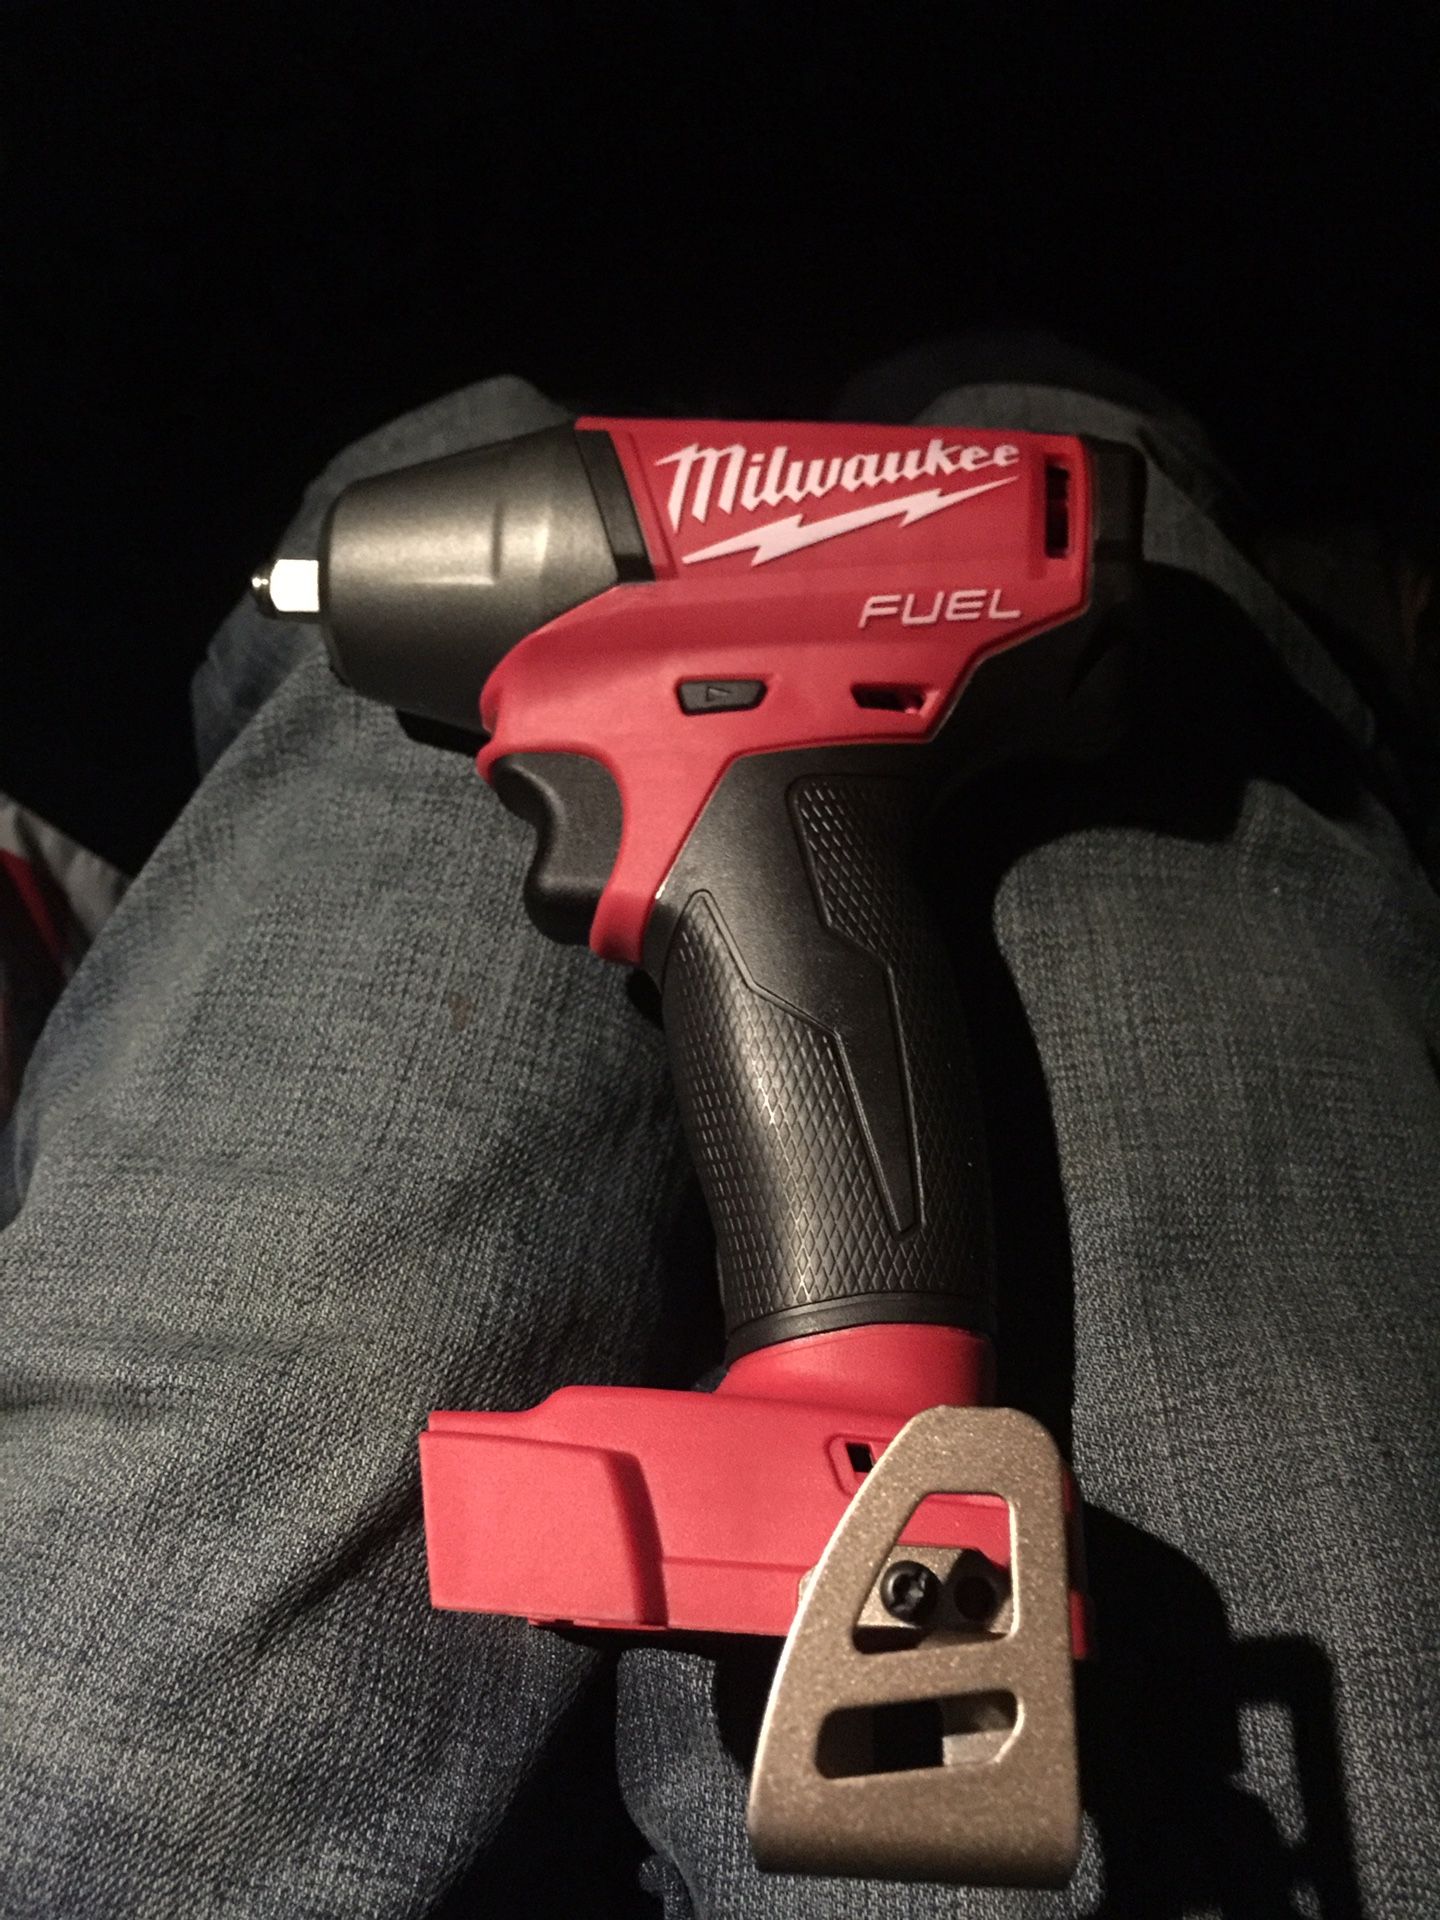 Milwaukee 3/8” fuel impact wrench